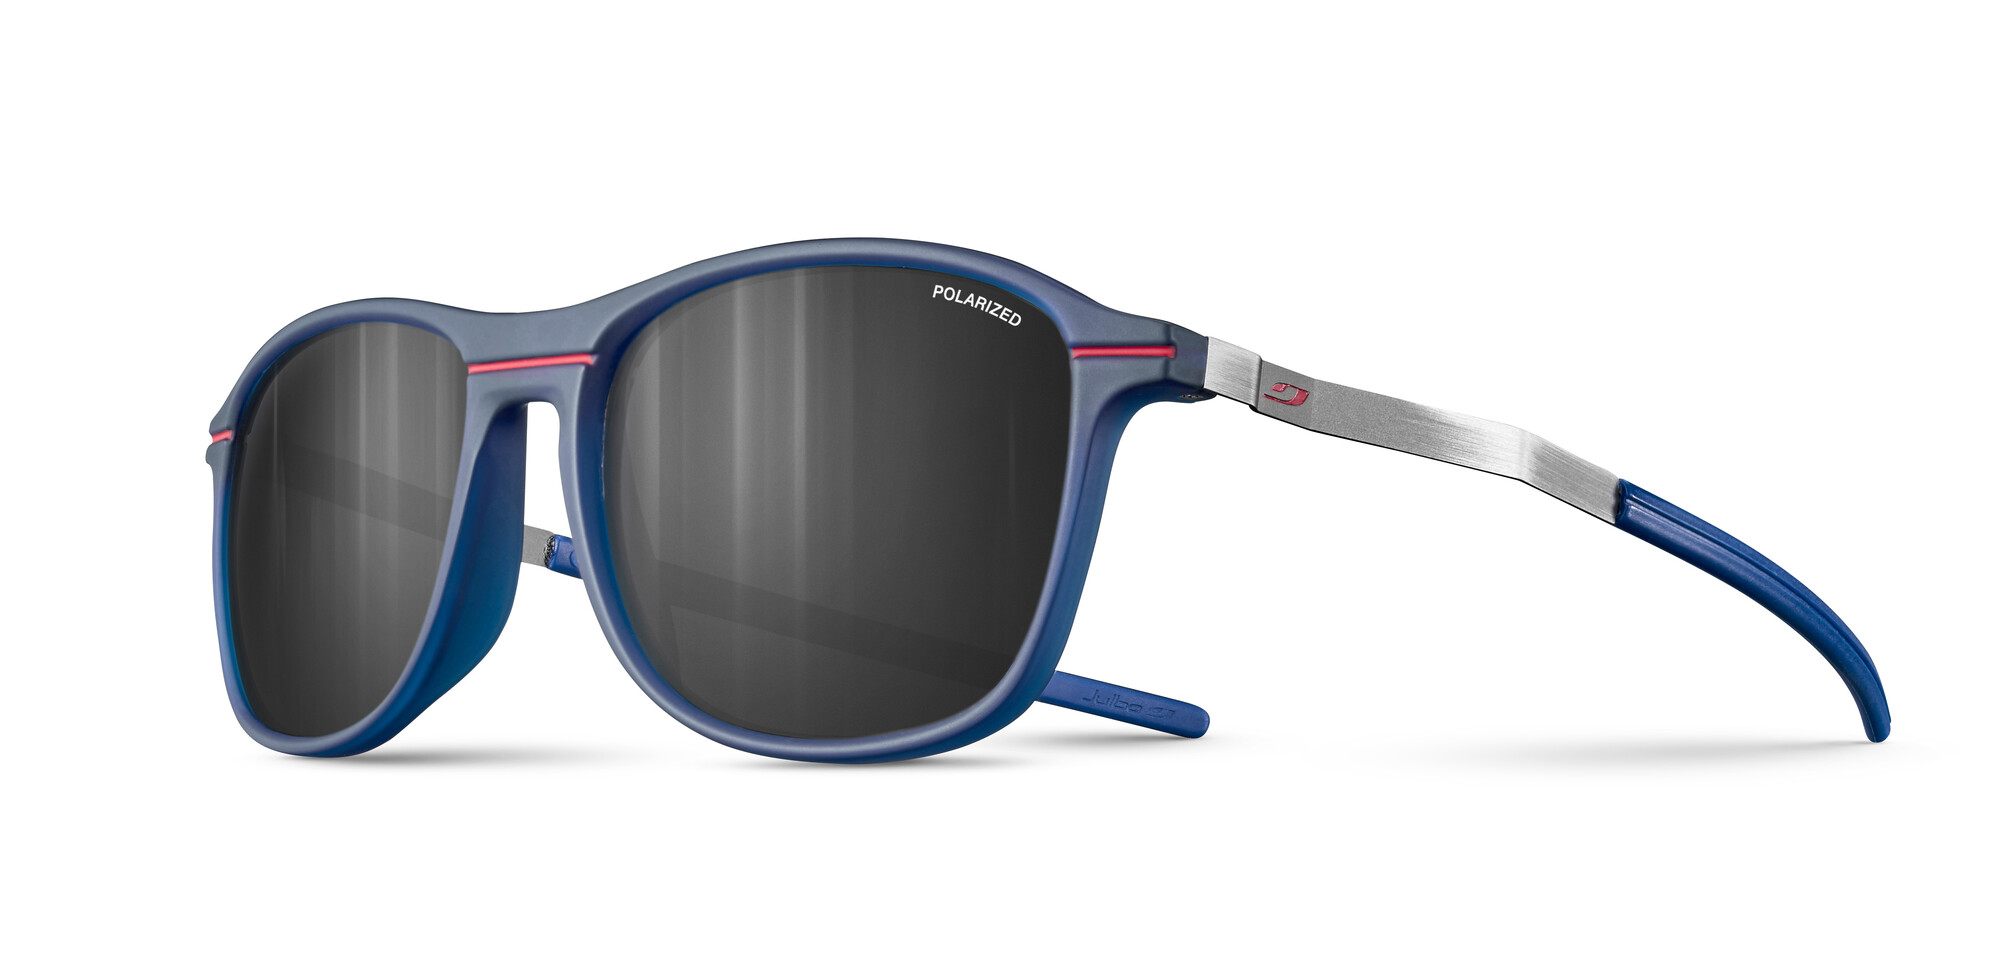 Julbo - UV Sunglasses for men - Fuse - Polarized 3 - Blue & red